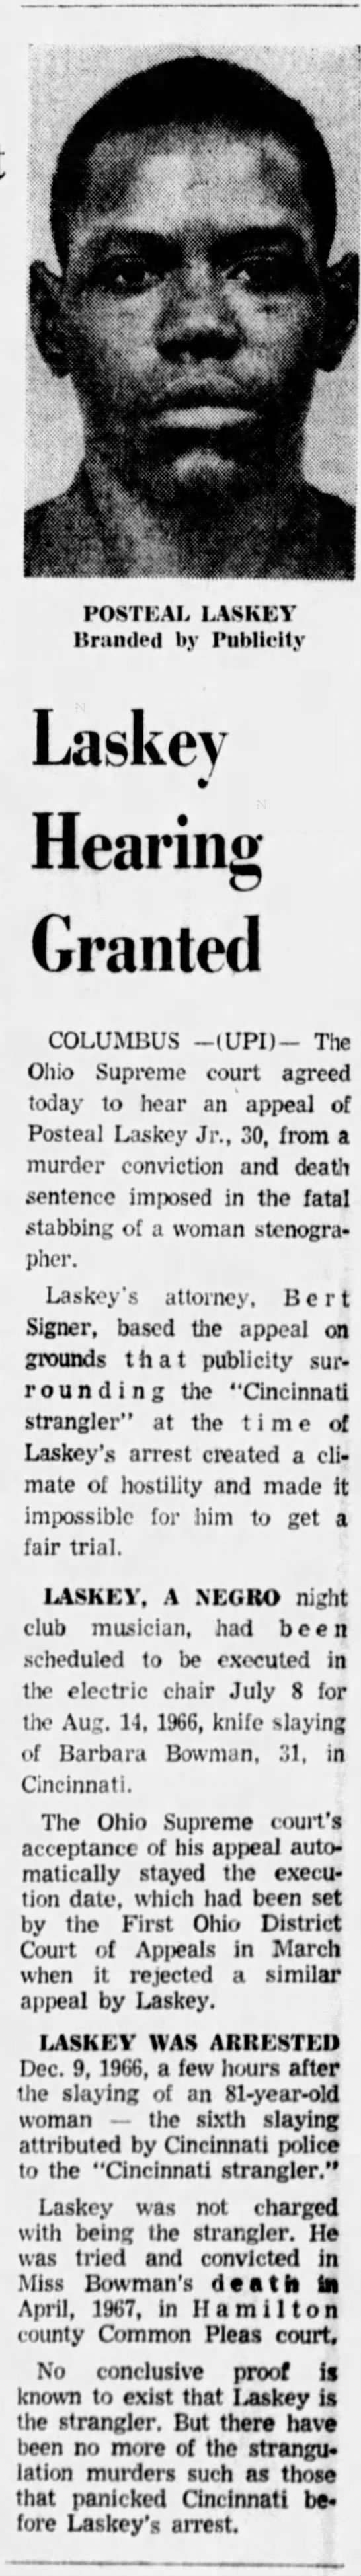 Cincinnati Strangler - Posteal Laskey - 12 Jun 1968 - 